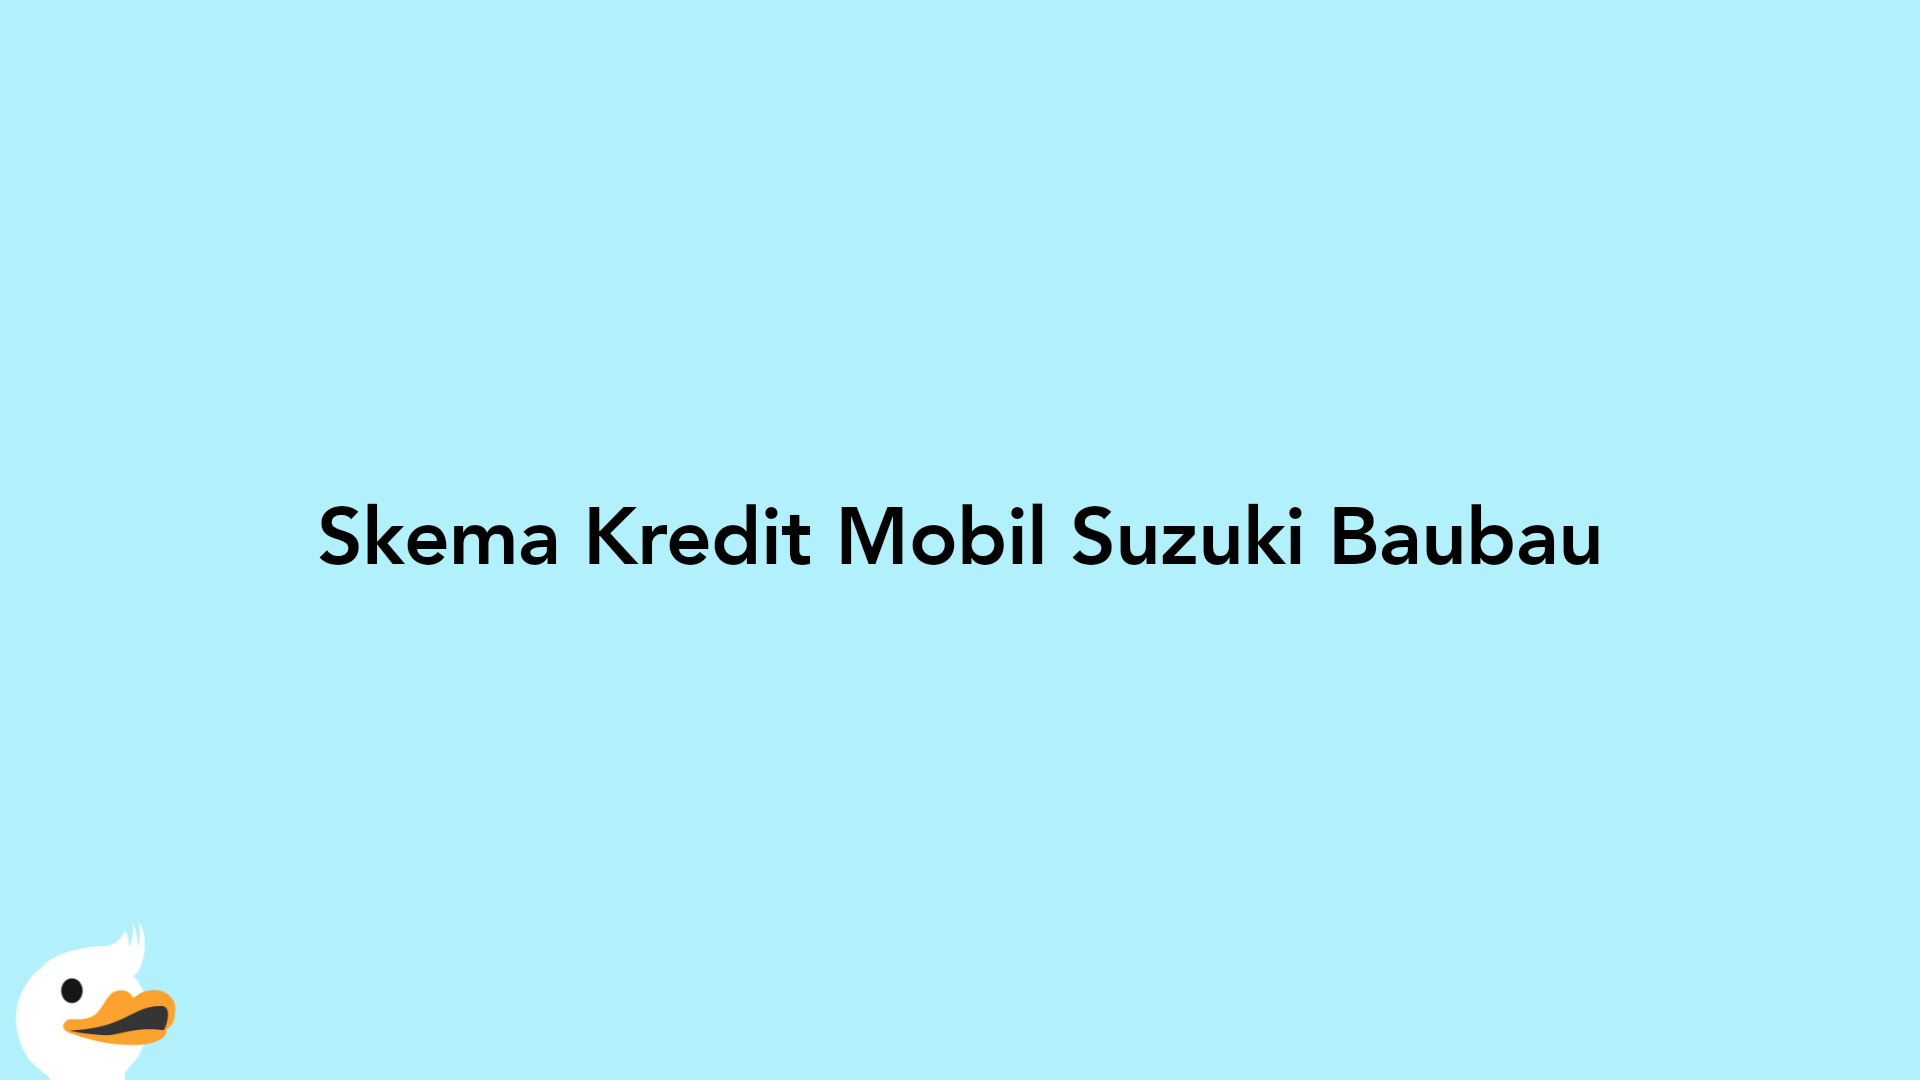 Skema Kredit Mobil Suzuki Baubau